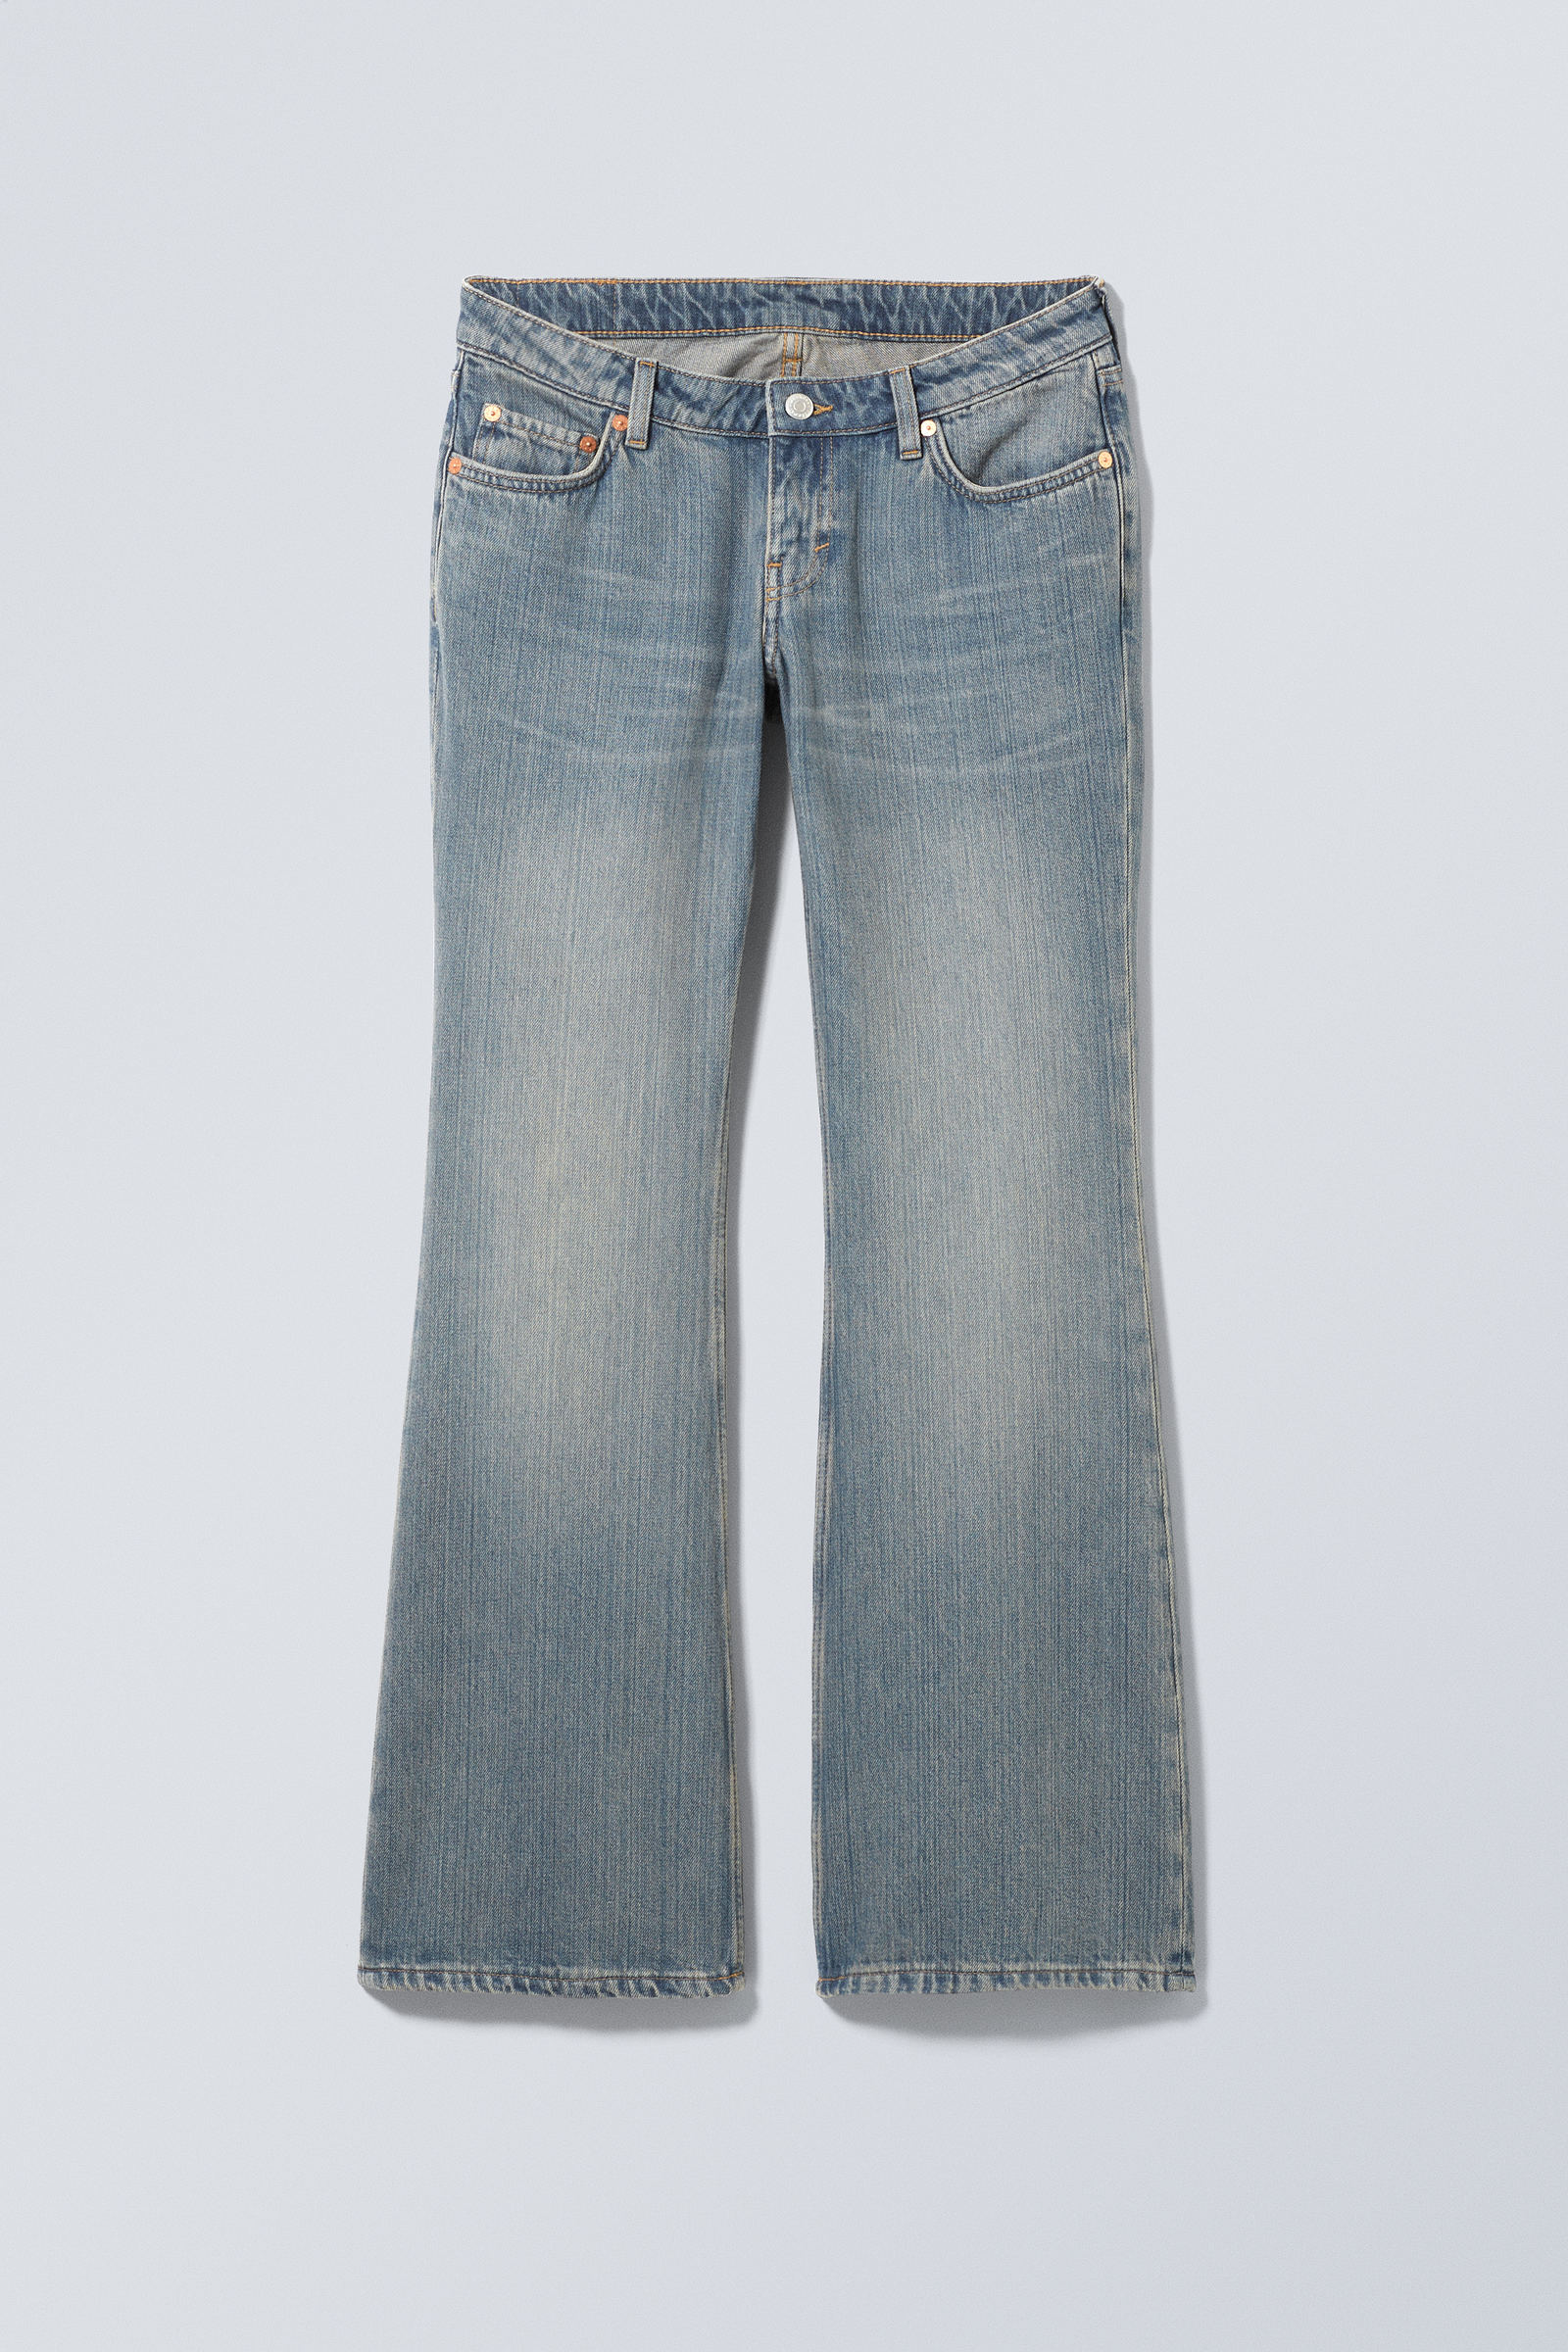 Trove Blue - Nova Low Slim Bootcut Jeans - 1